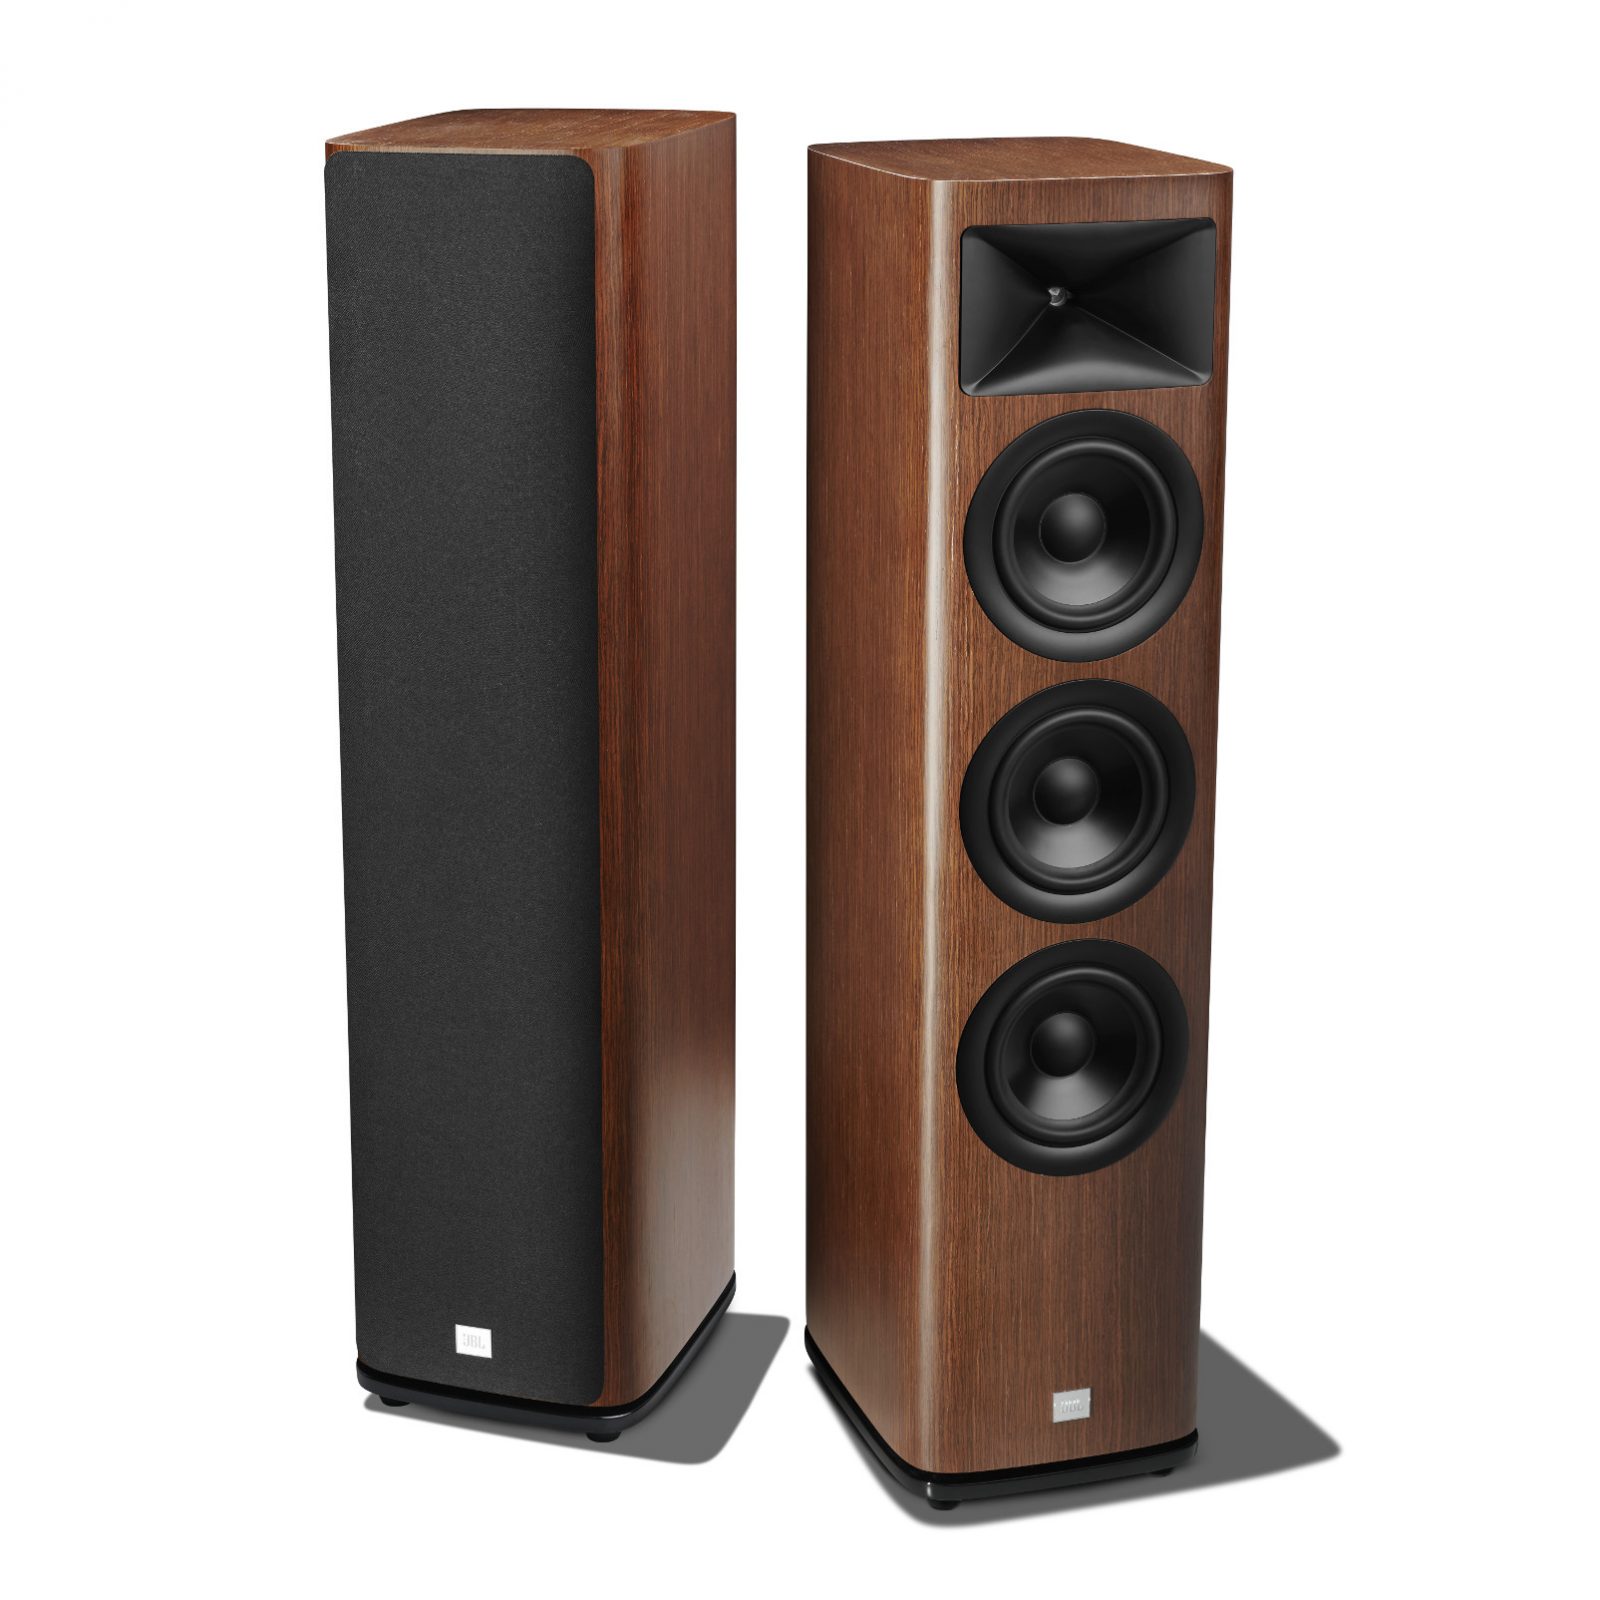 JBL HDI Series Speakers